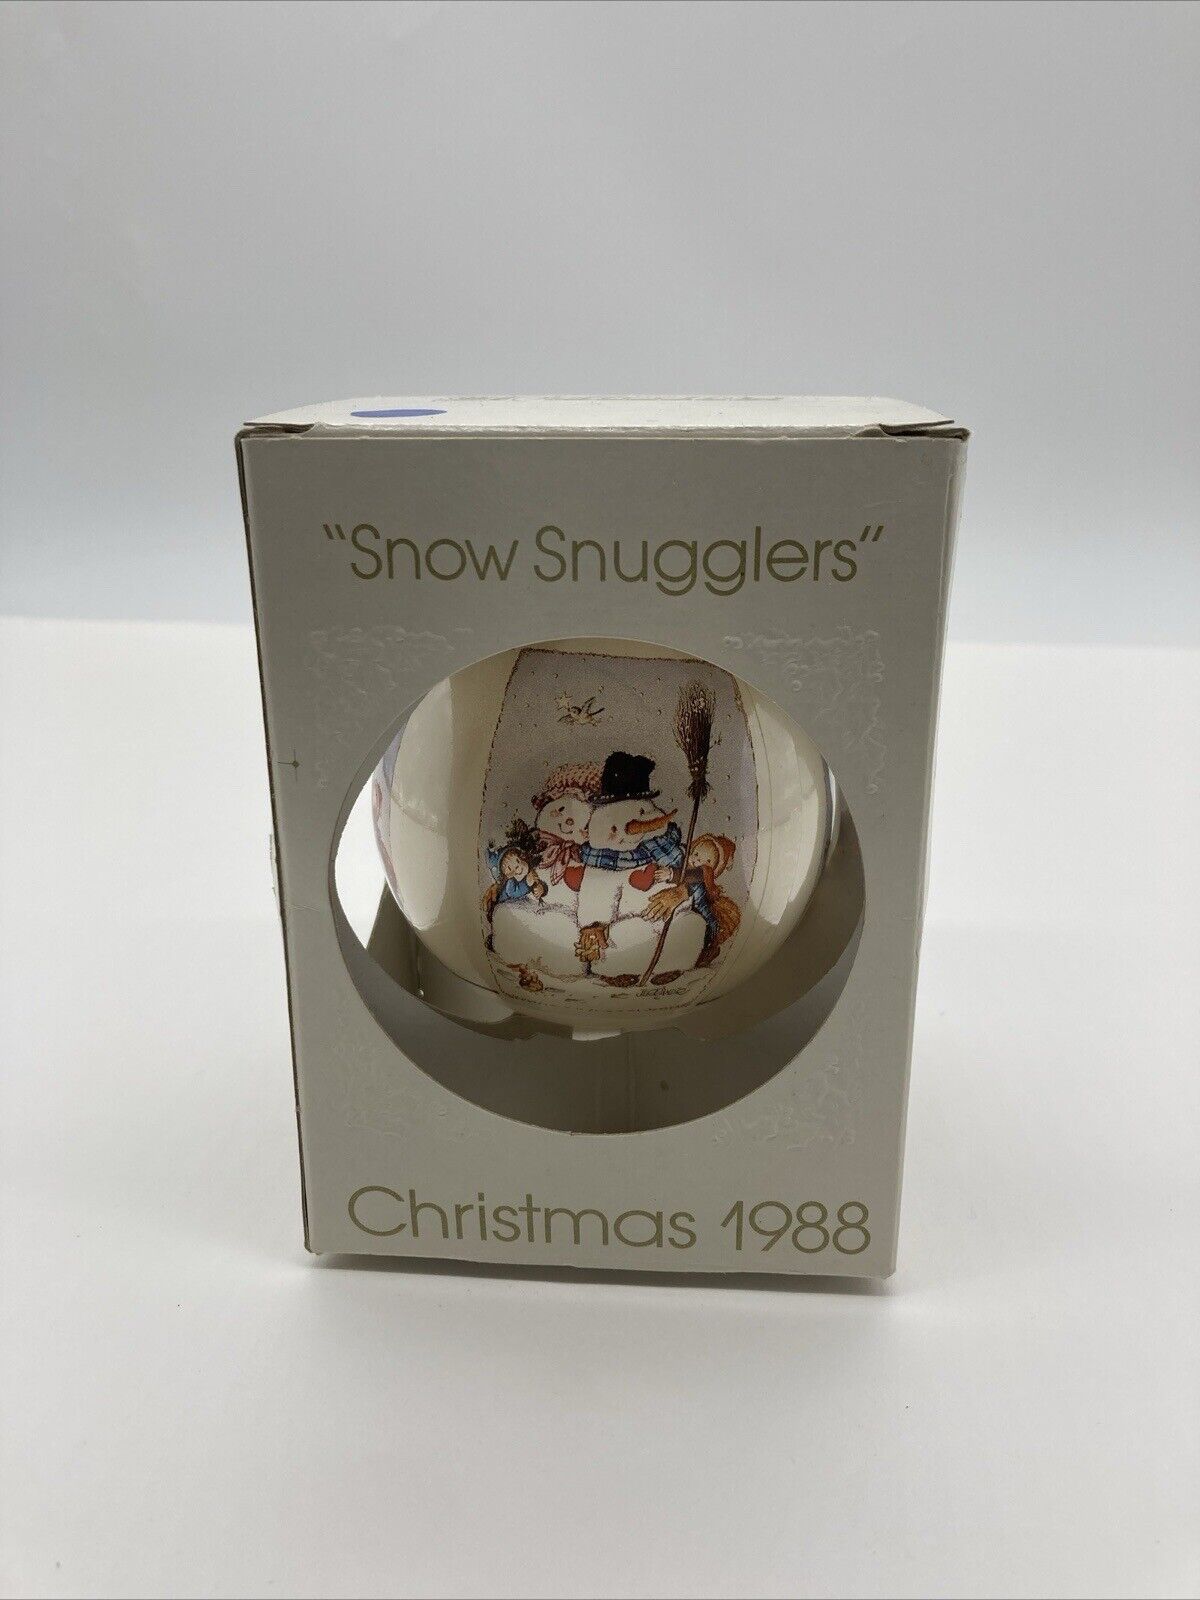 Schmid Vintage Christmas 1988 “Snow Snugglers” Ornament